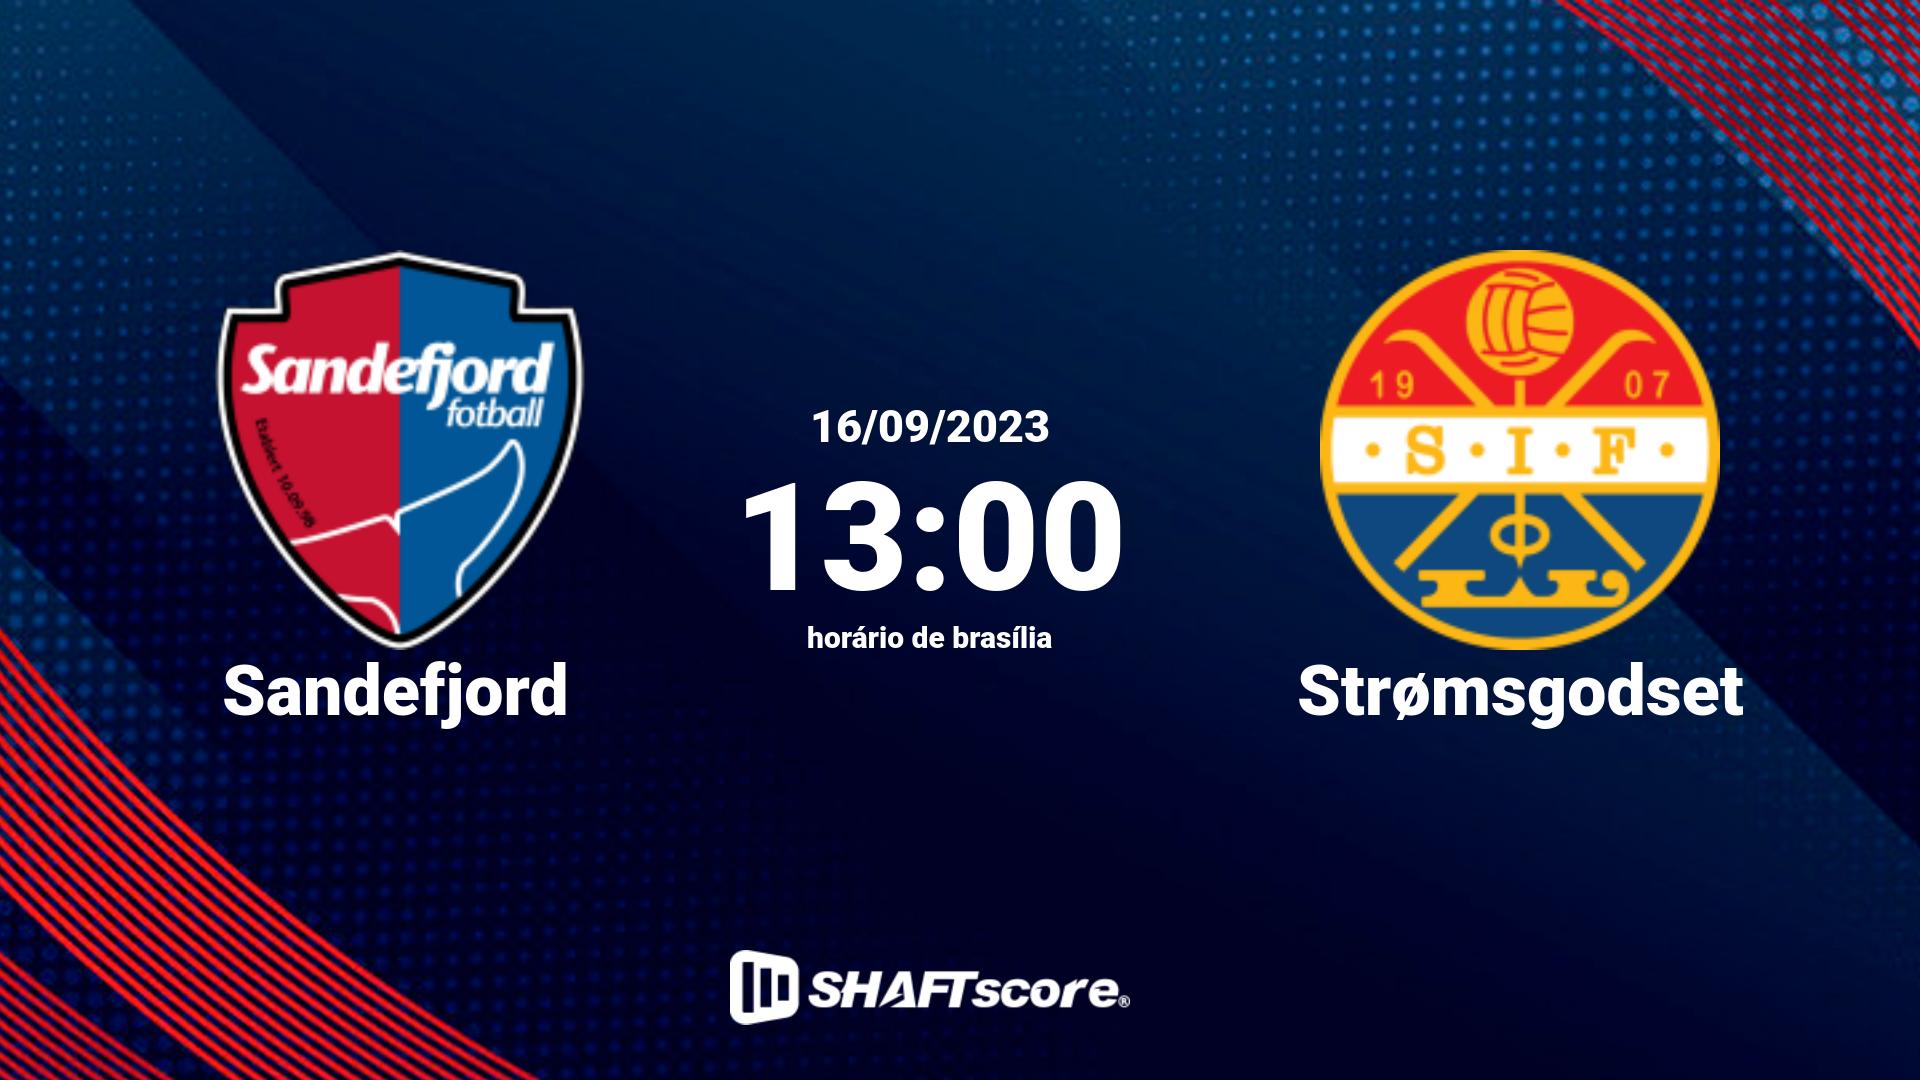 Estatísticas do jogo Sandefjord vs Strømsgodset 16.09 13:00